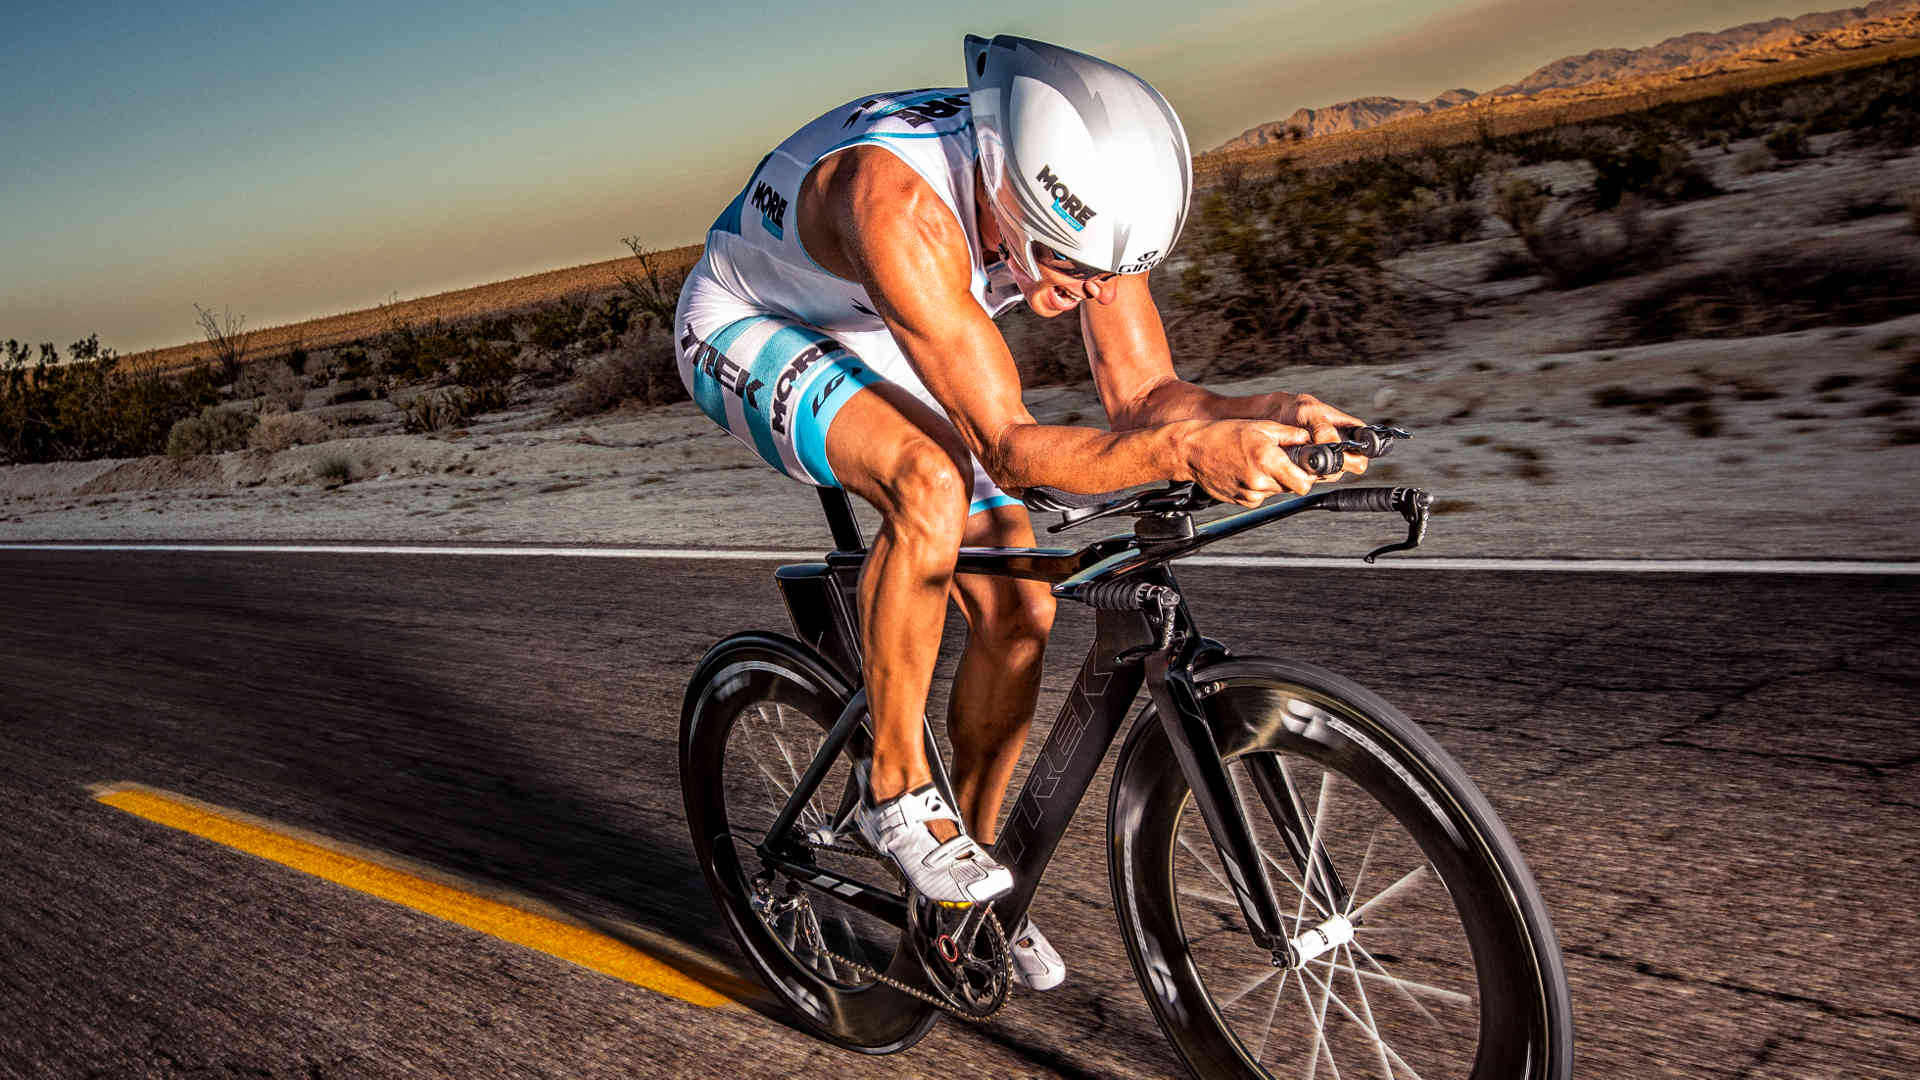 Triathlon Sport Pictures Download Free Desktop Wallpaper Images